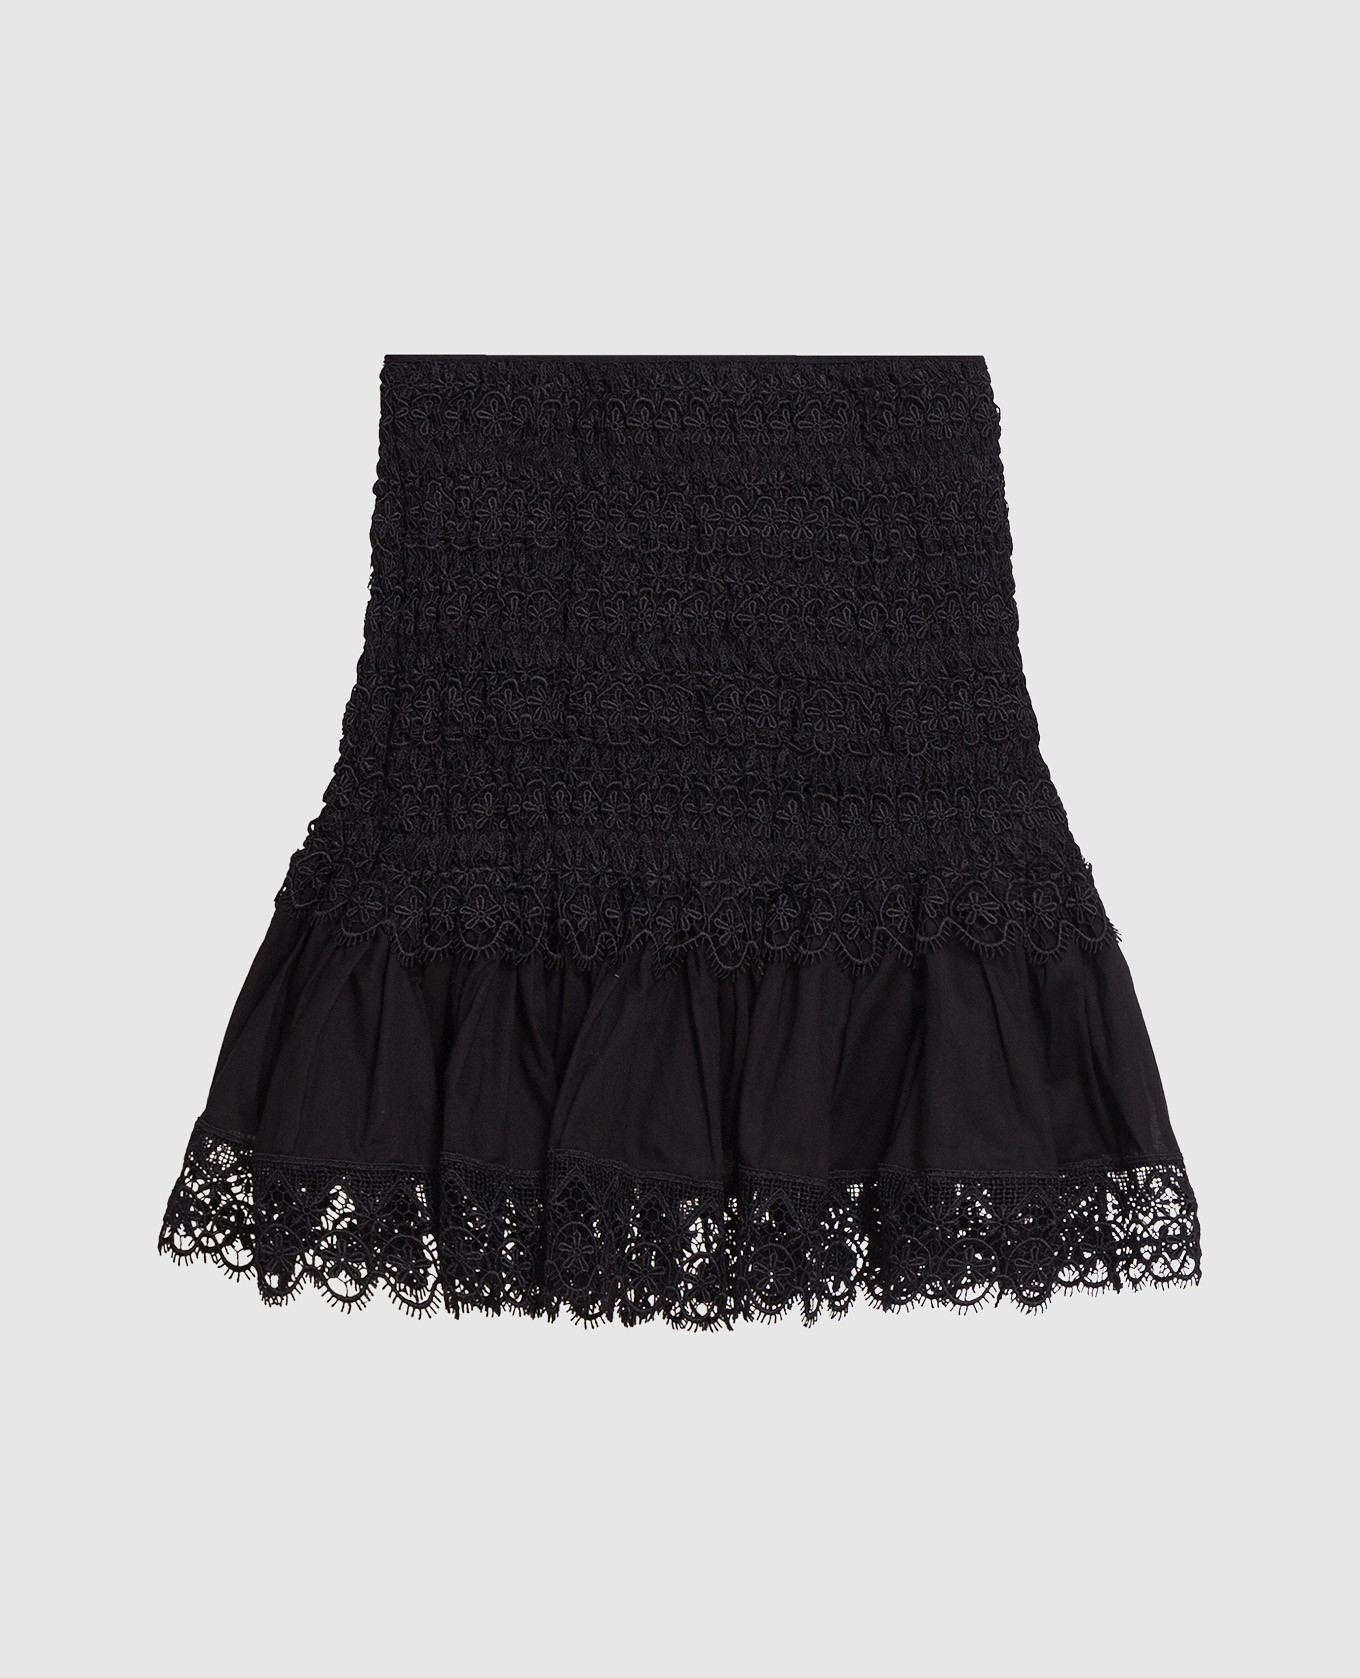 Black skirt Fleur with lace